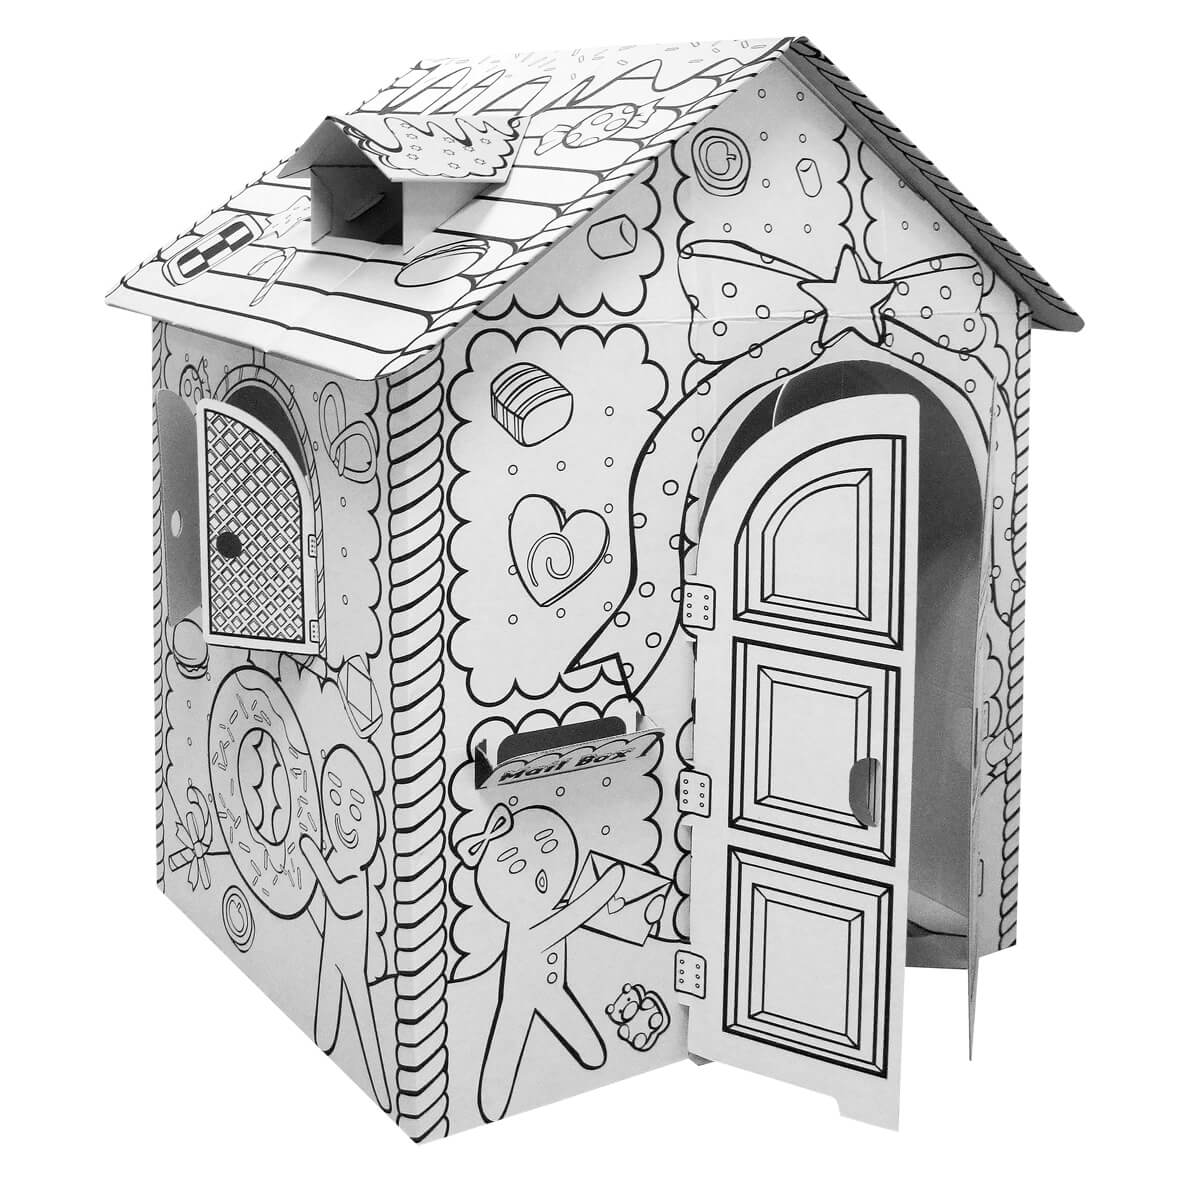 cardboard-gingerbread-house-playhouse-8147-01